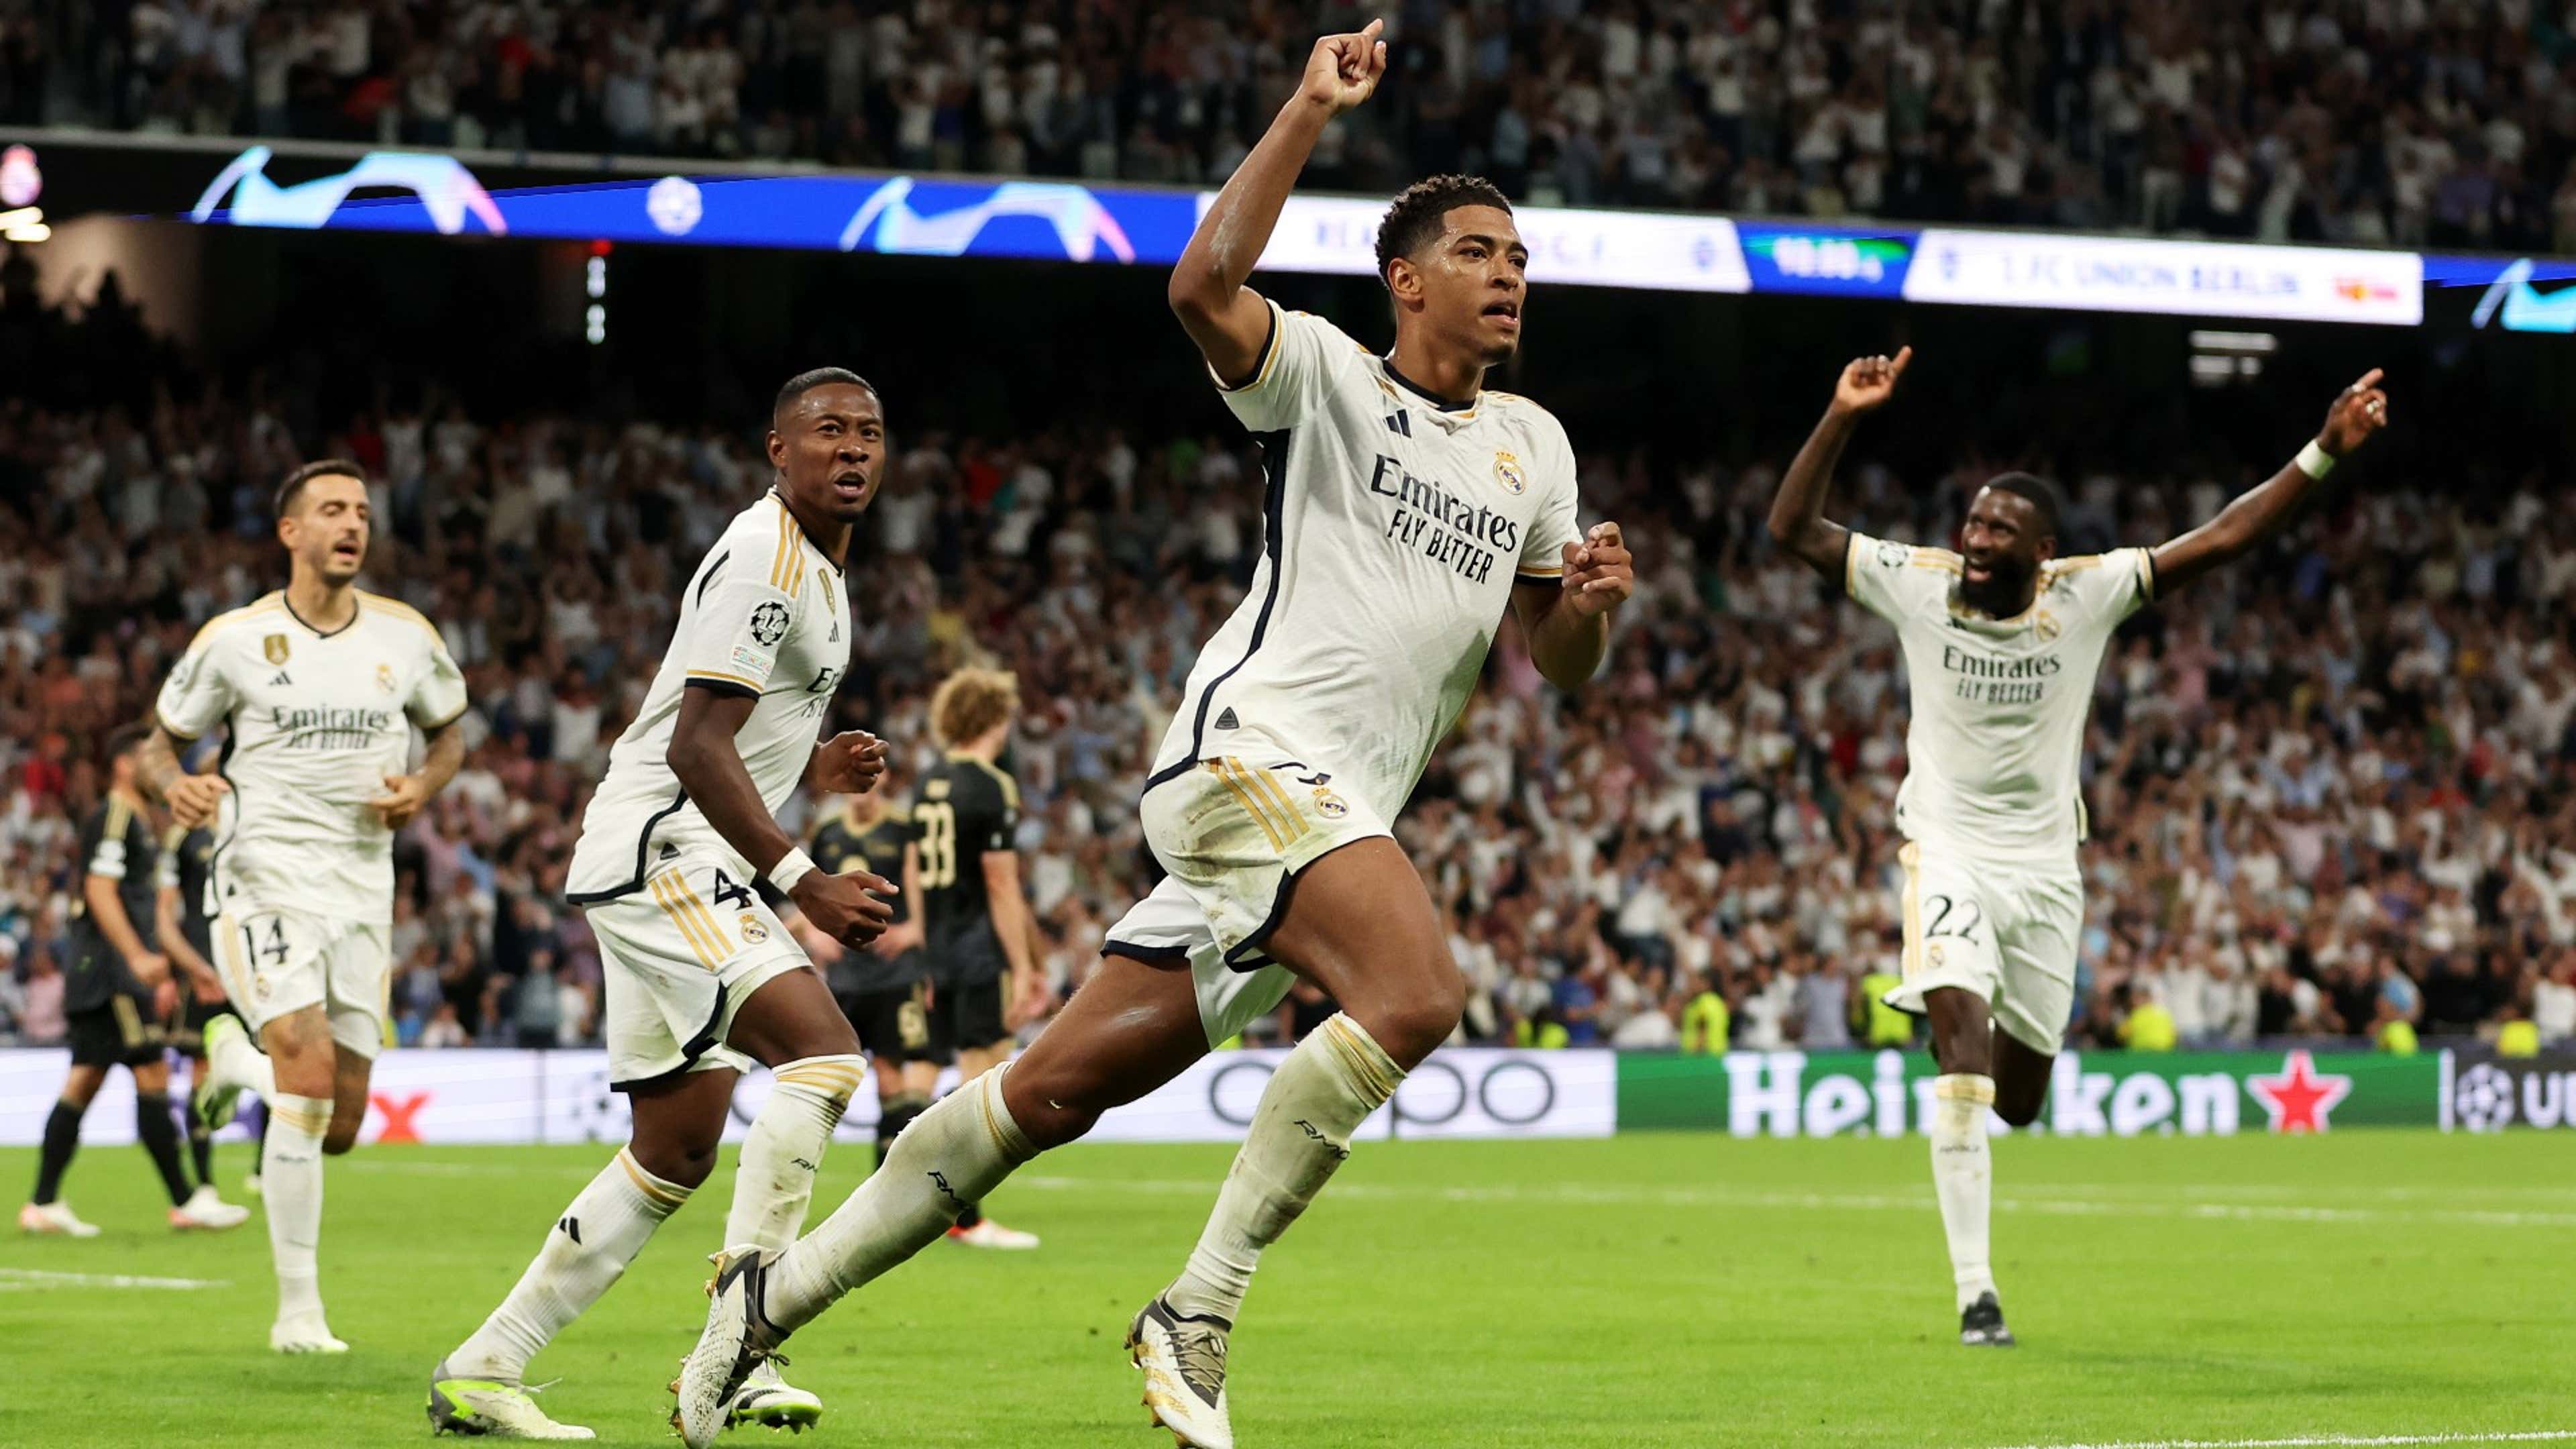 Real Madrid vs Union Berlin summary: score, goals, highlights